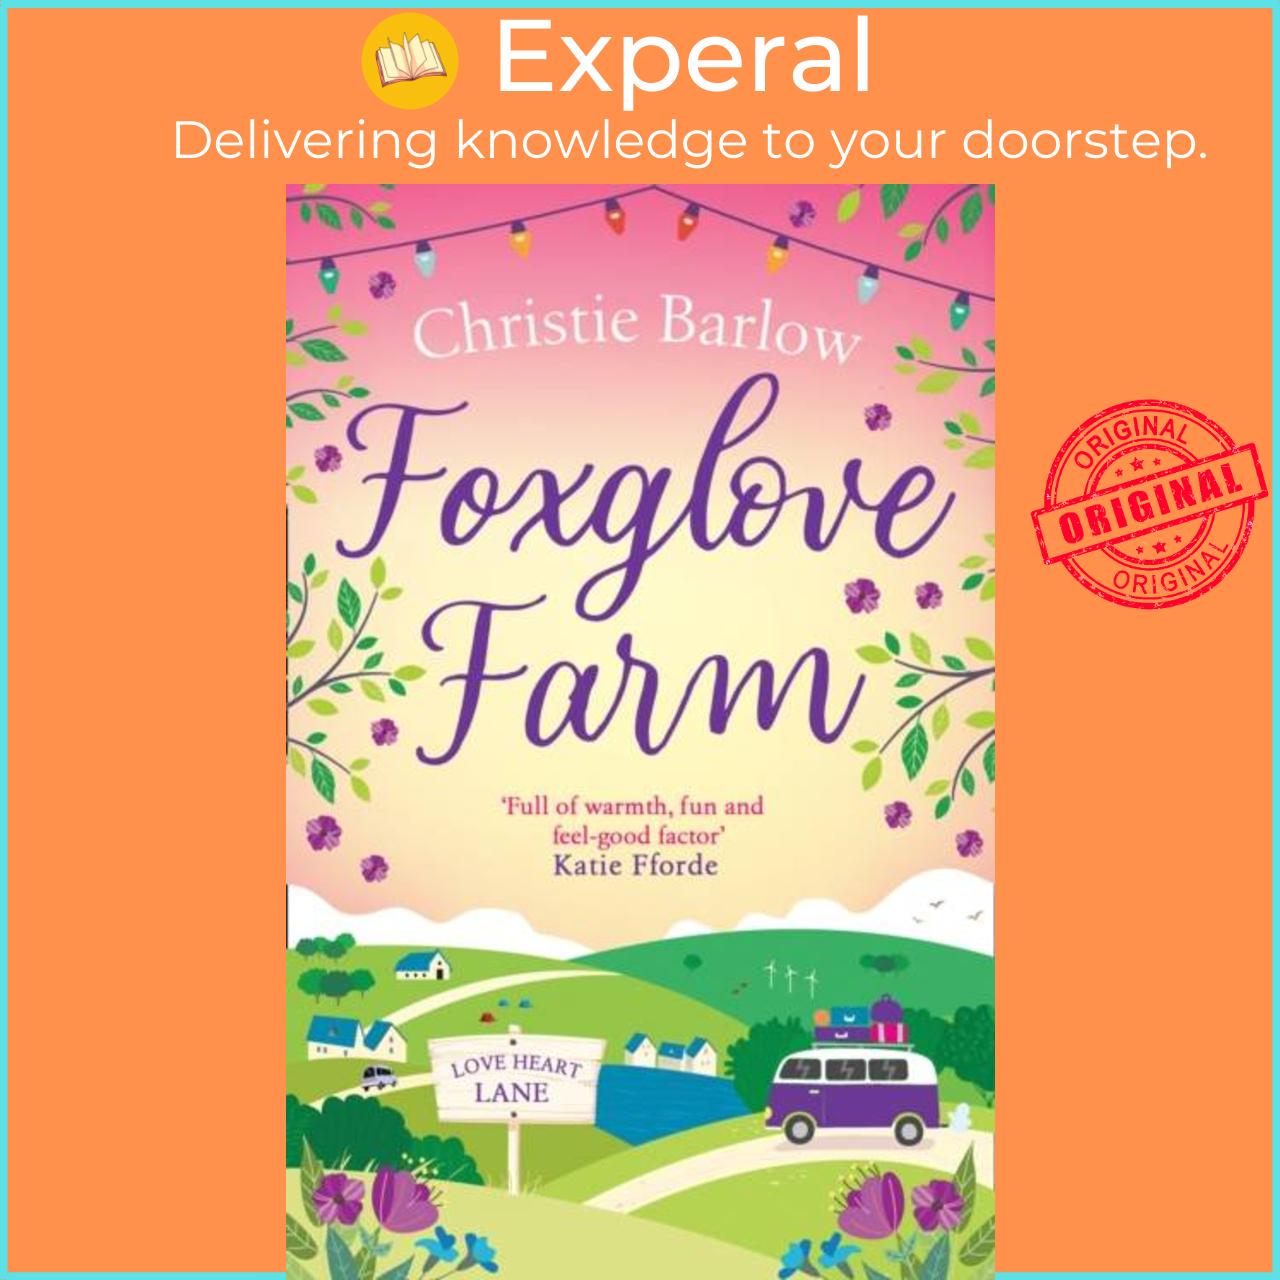 Sách - Foxglove Farm by Christie Barlow (UK edition, paperback)